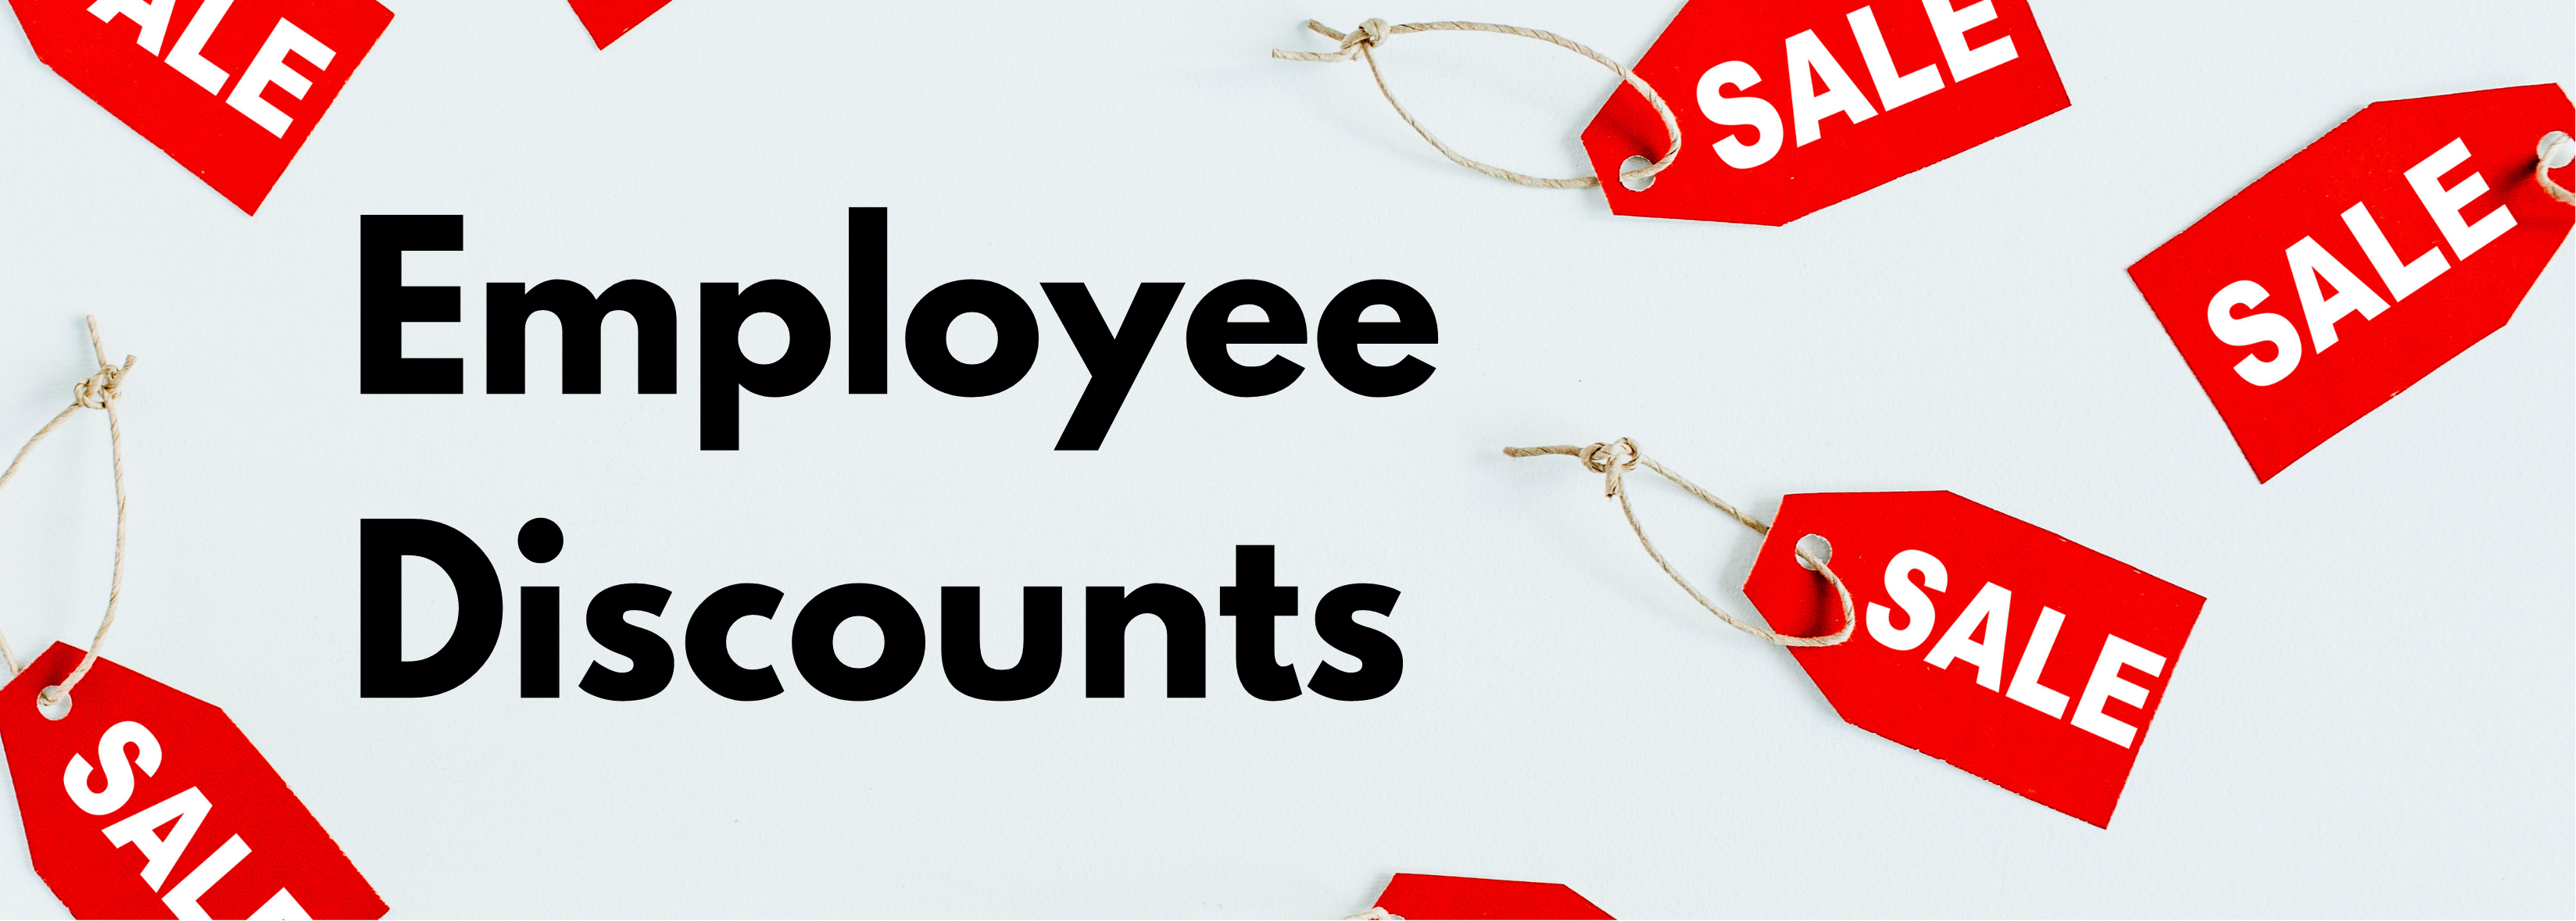 Employee Discounts2.png